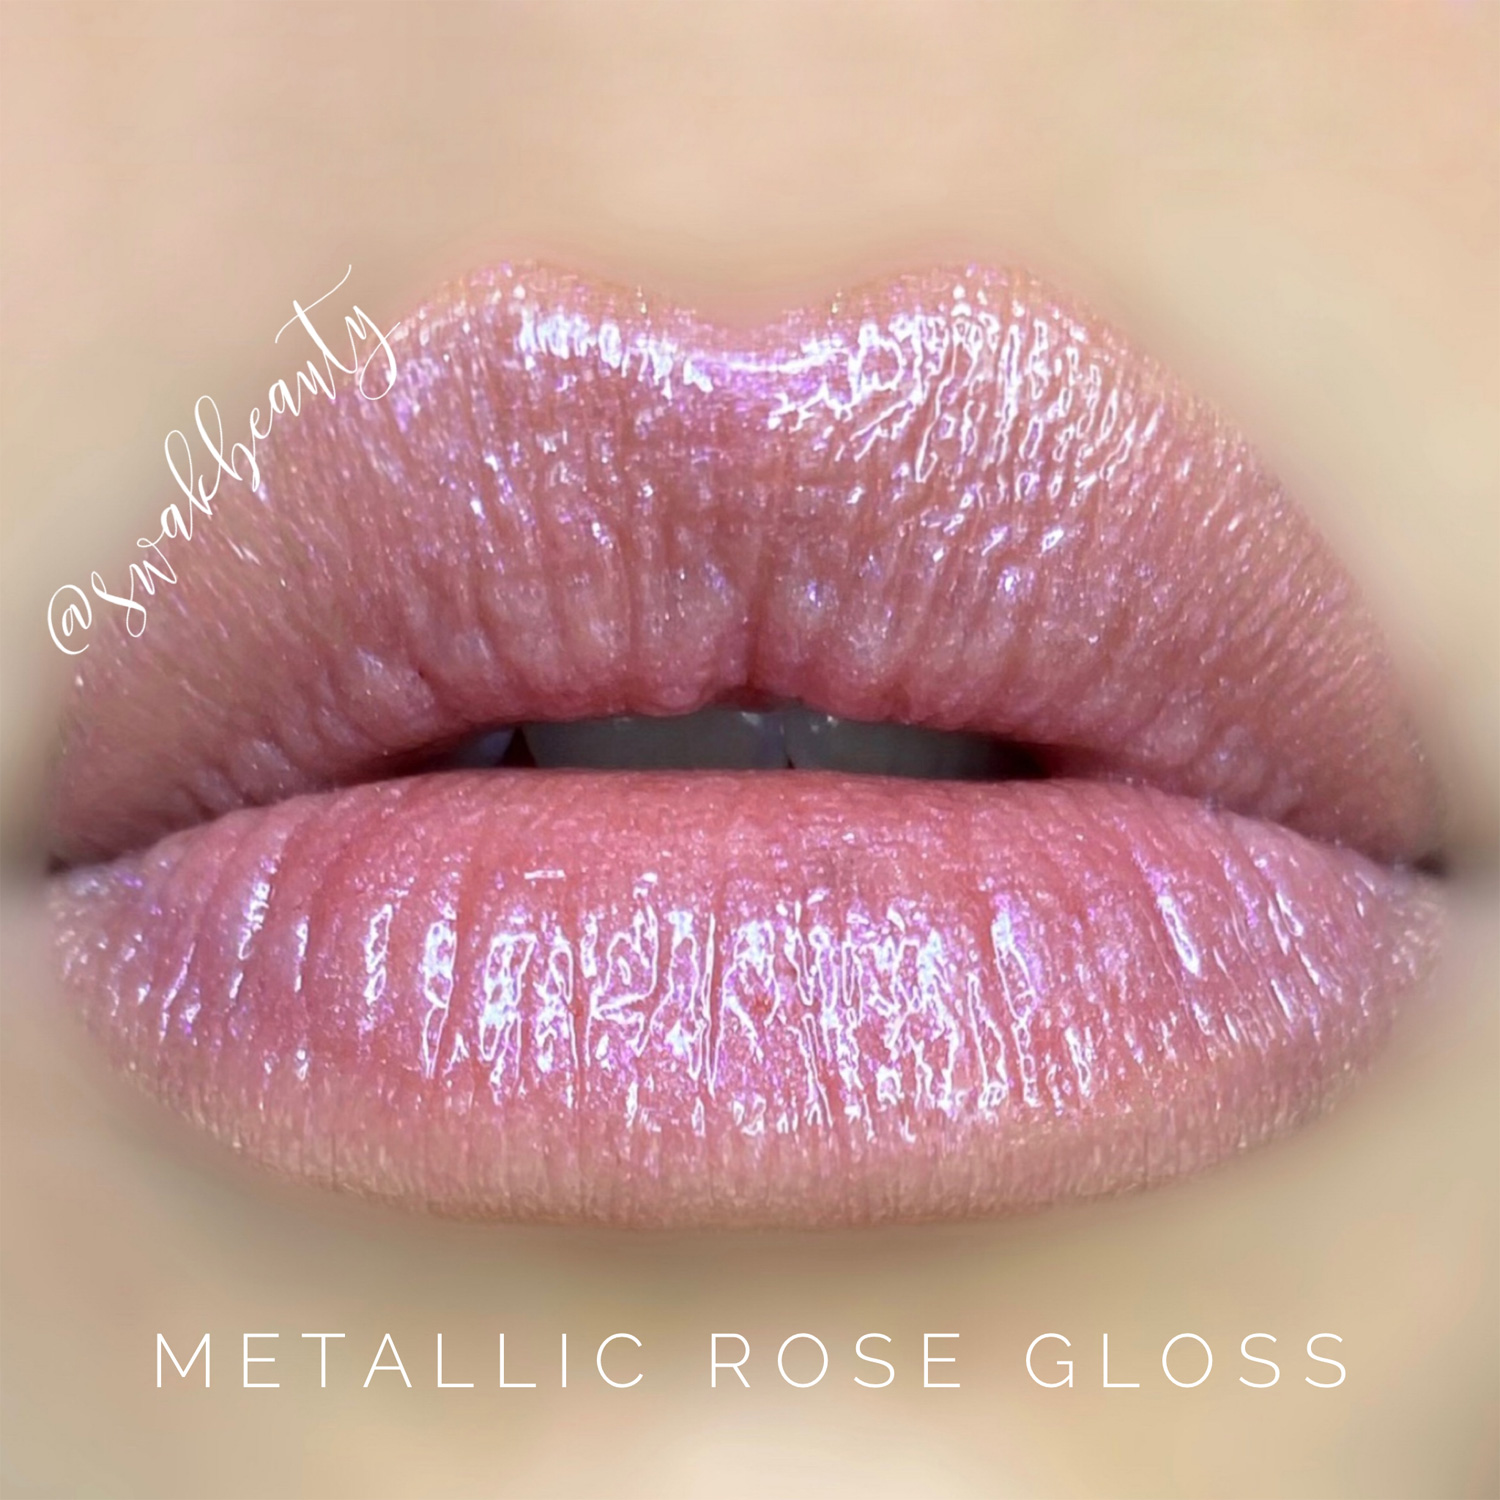 Lipsense Metallic Rose Gloss Limited Edition Swakbeauty Com